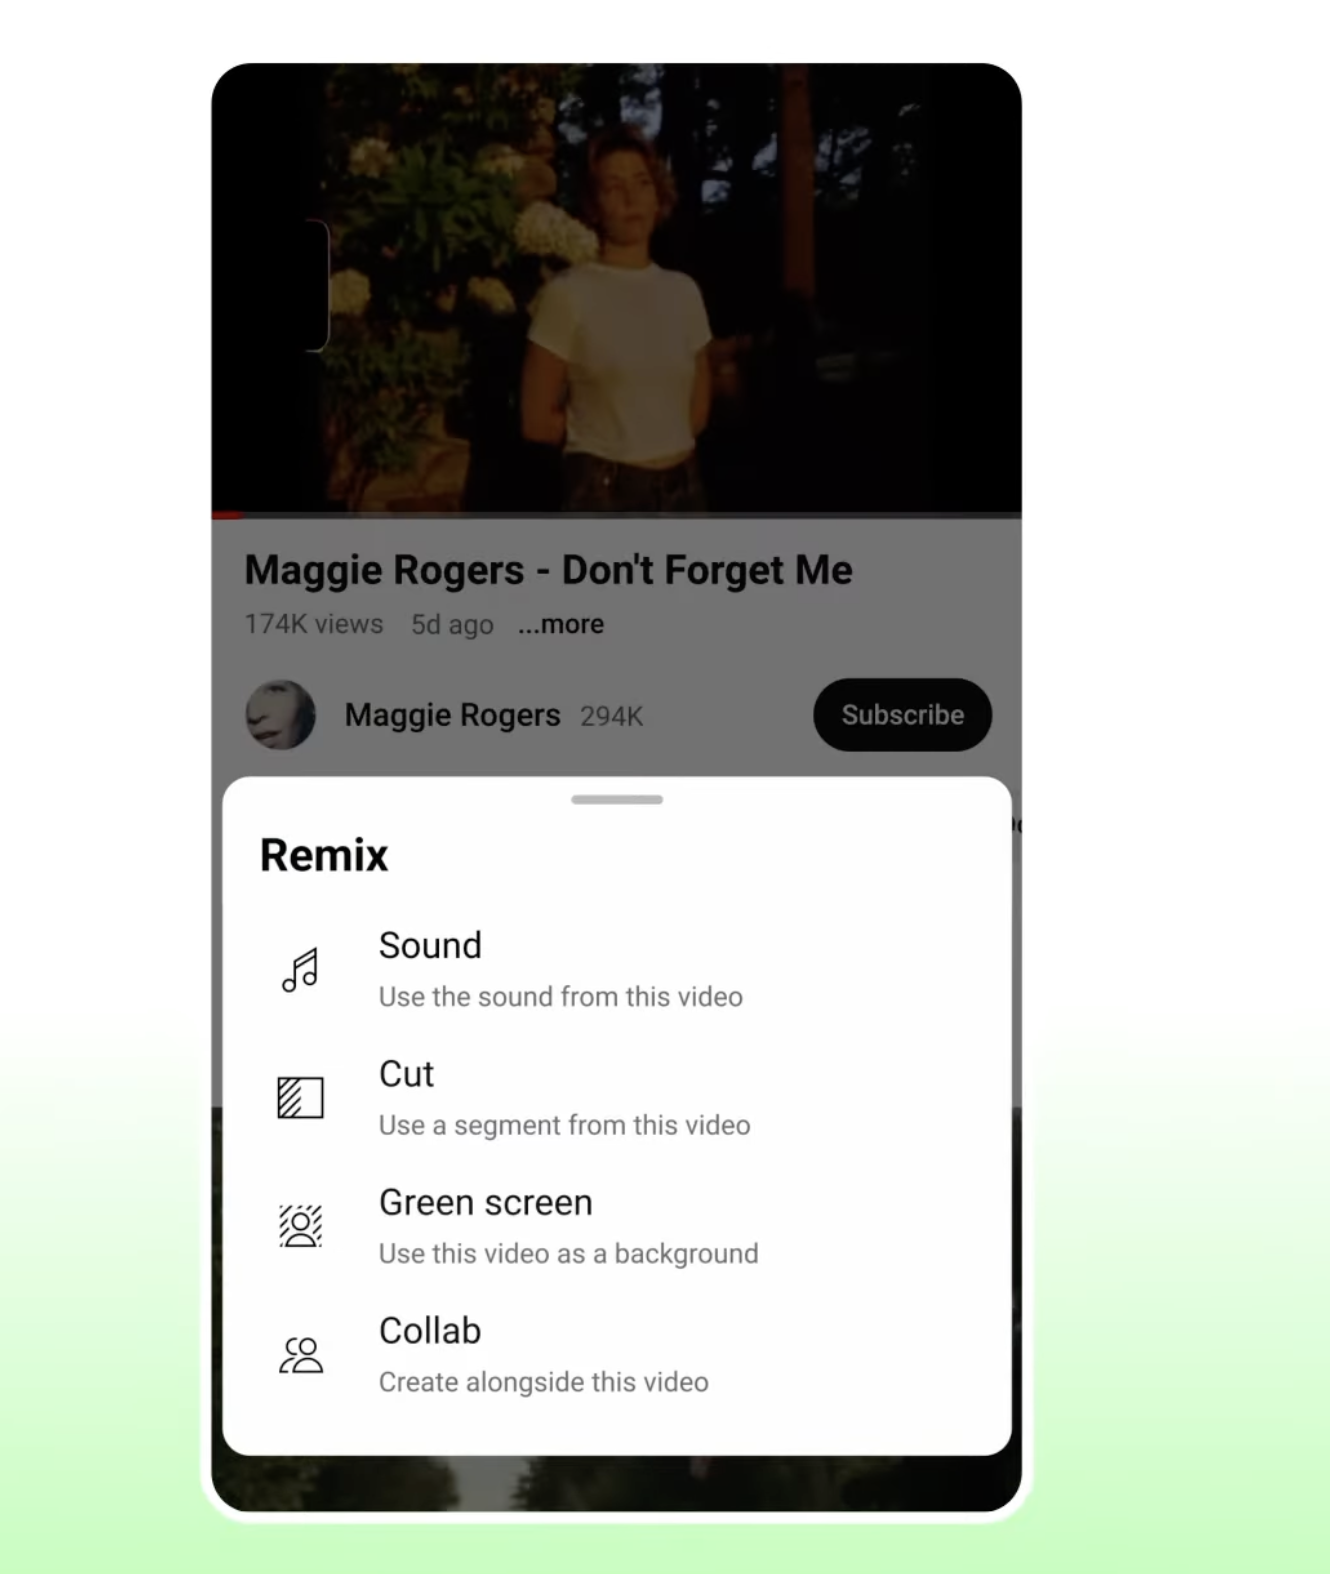 YouTube Shorts' new music video remix capabilities 